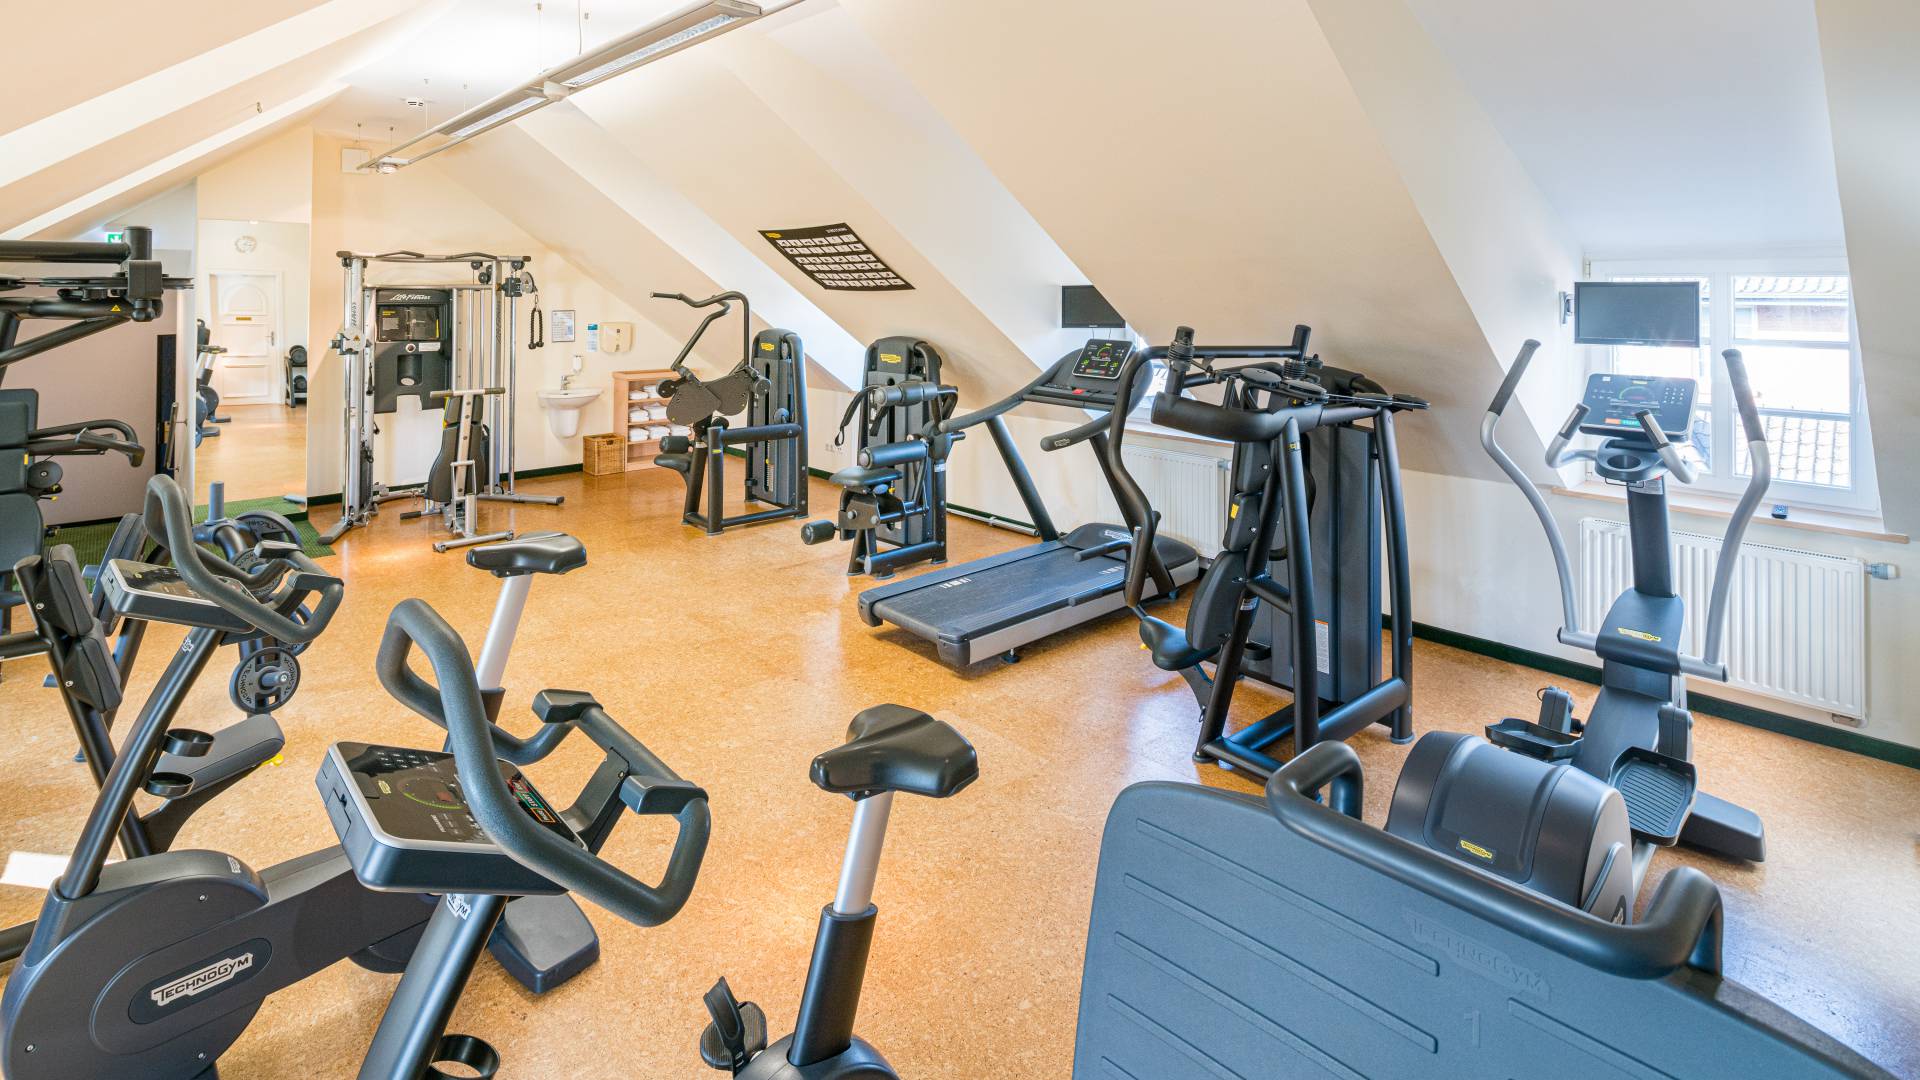 Fitness room at the Jagdhaus Eiden